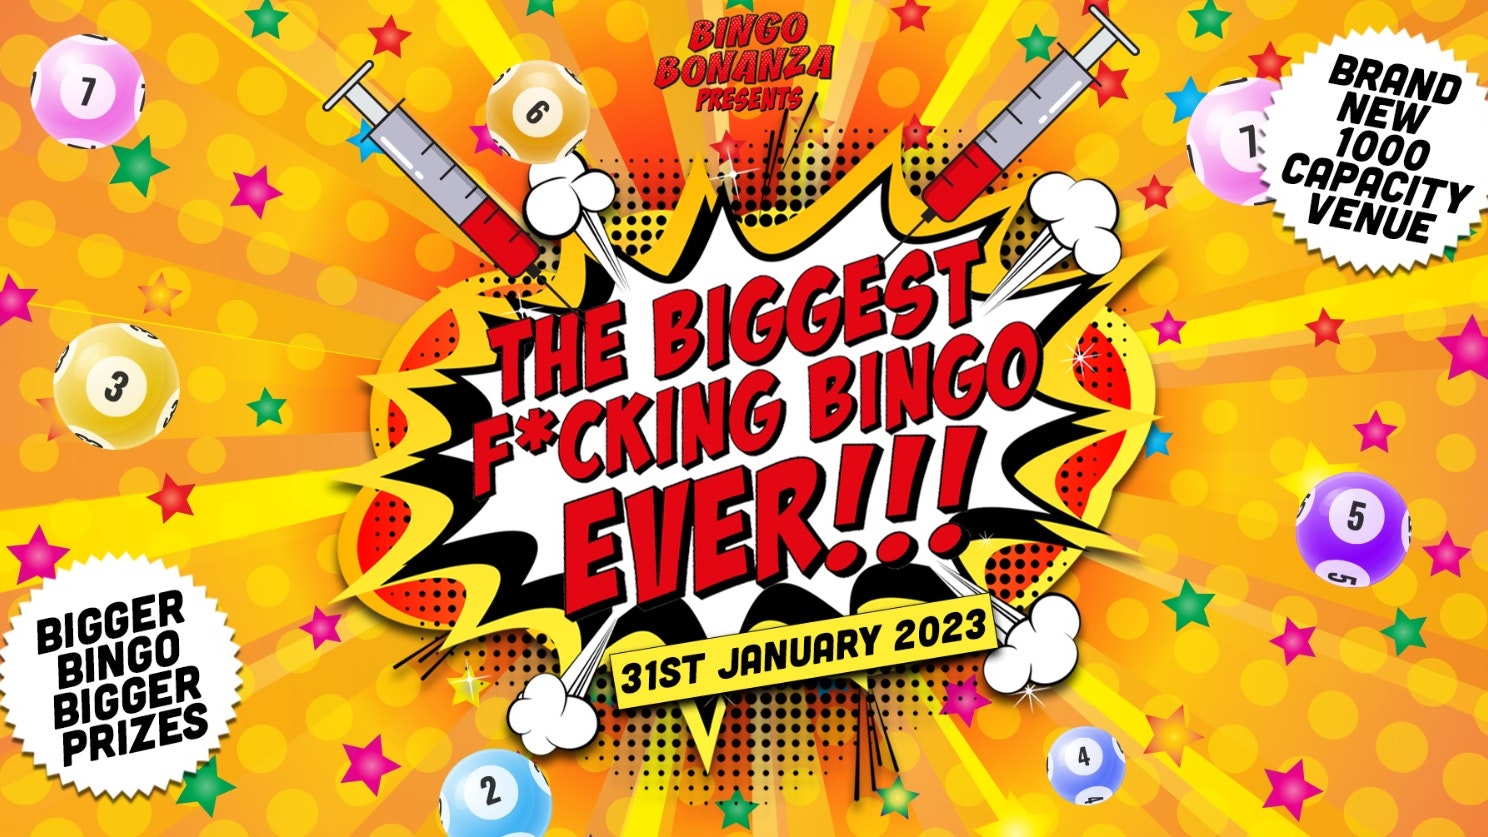 *USE BINGO VALENTINES EVENT* BINGO BONANZA – THE BIGGEST F*CKING BINGO EVER!!! | NEW 1000 CAPACITY VENUE! | £1 TICKETS! | THE FED | NEW DATE 14th FEBRUARY